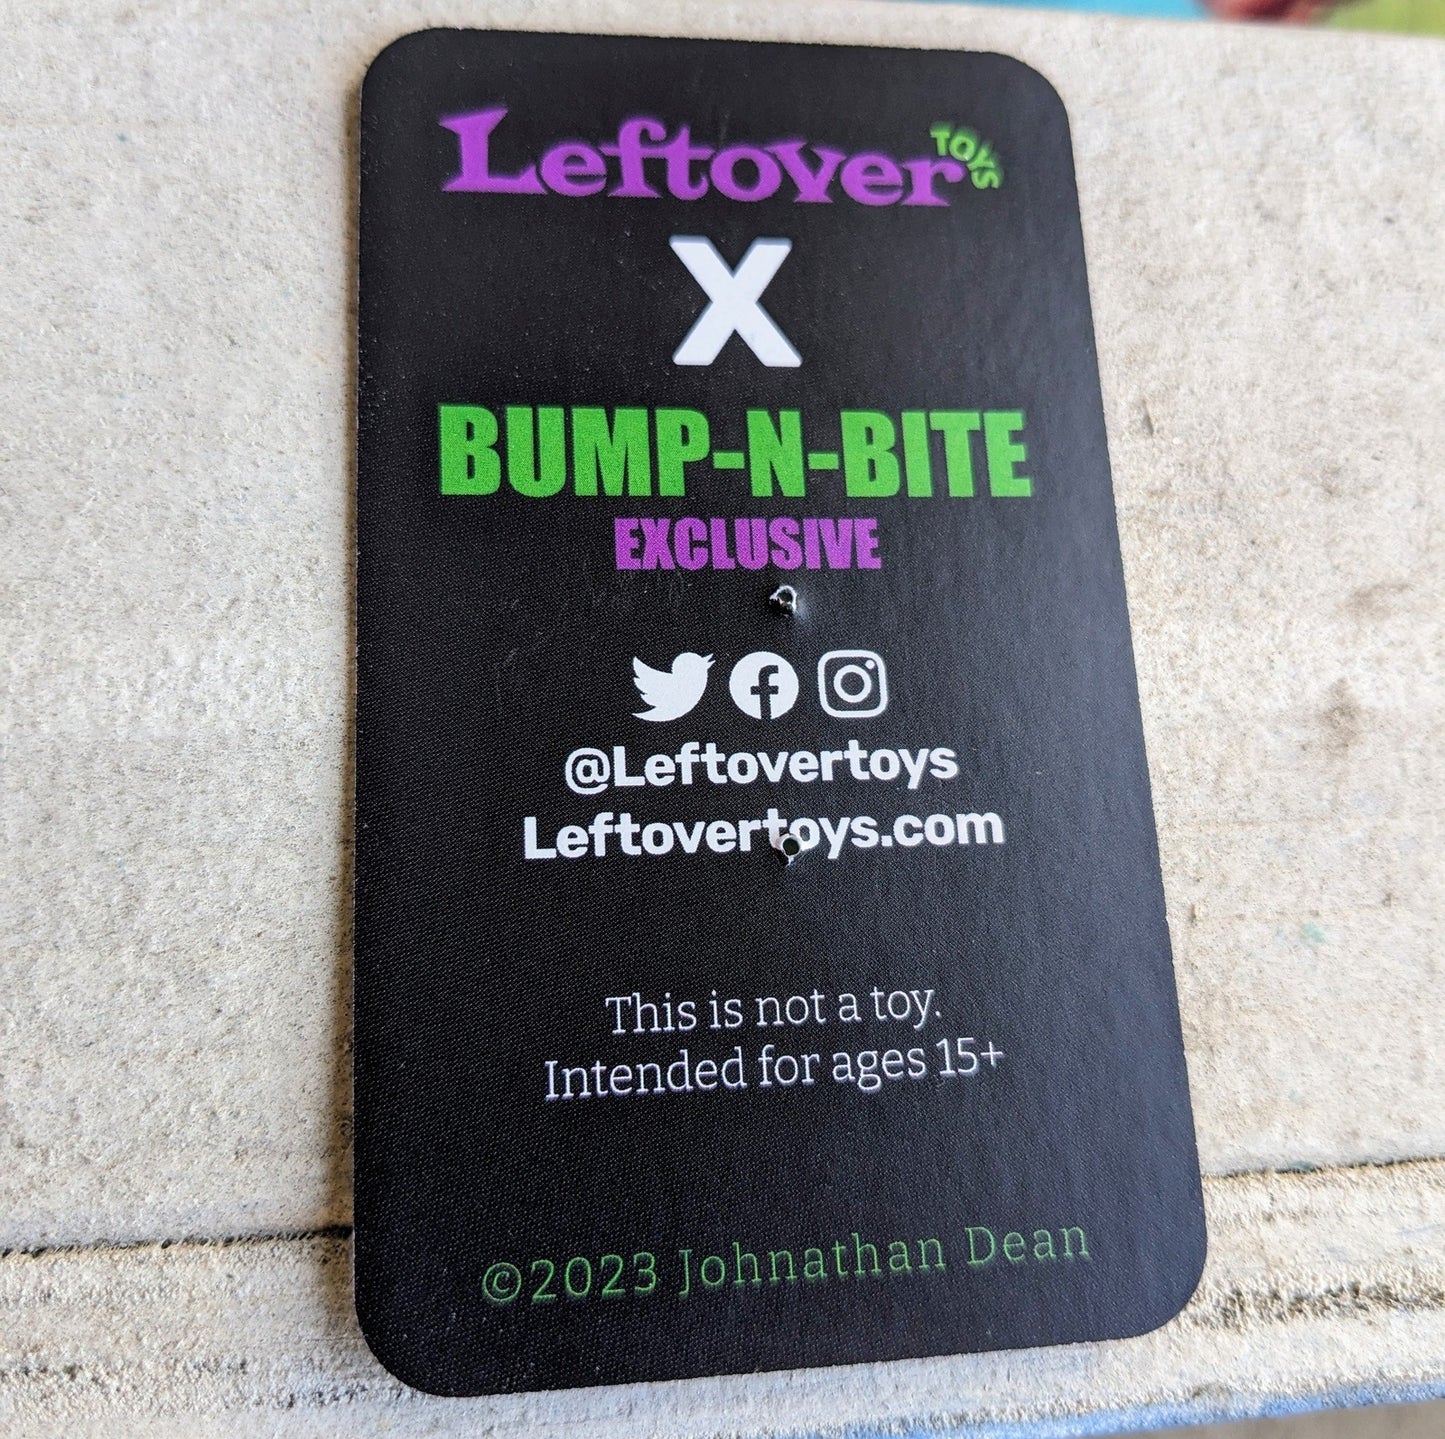 Bump-N-Bite x Leftover Toys Exclusive "Bump-N-Brite" / "Glitz-N-Glam" Enamel Pins & Exclusive Series Bump-N-Bite Logo #2 Leftovers Bundle